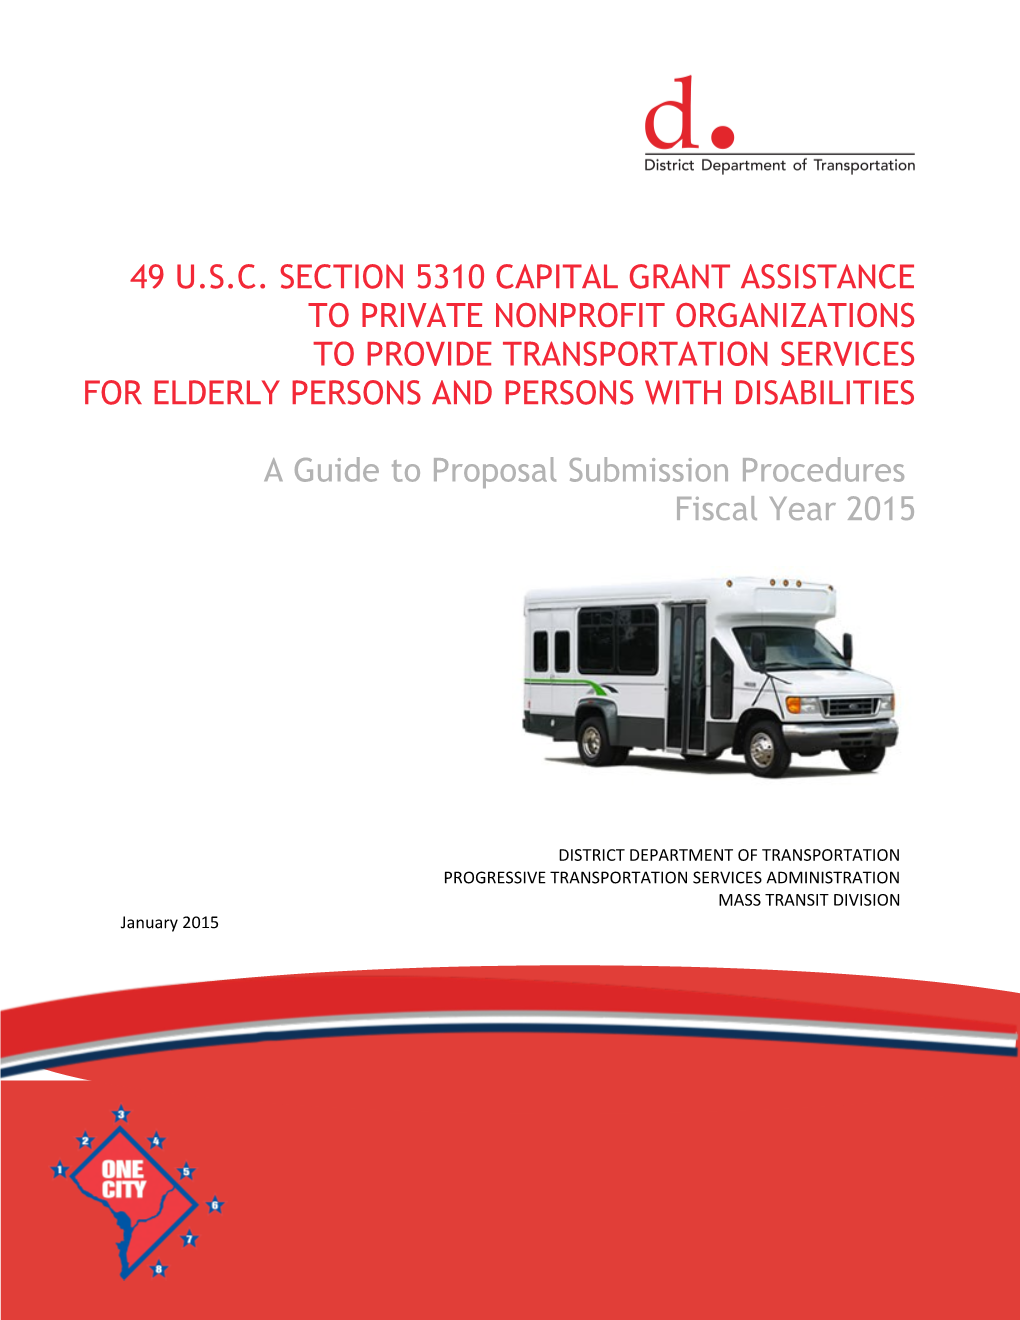 49 U.S.C. Section 5310 Capital Grant Assistance